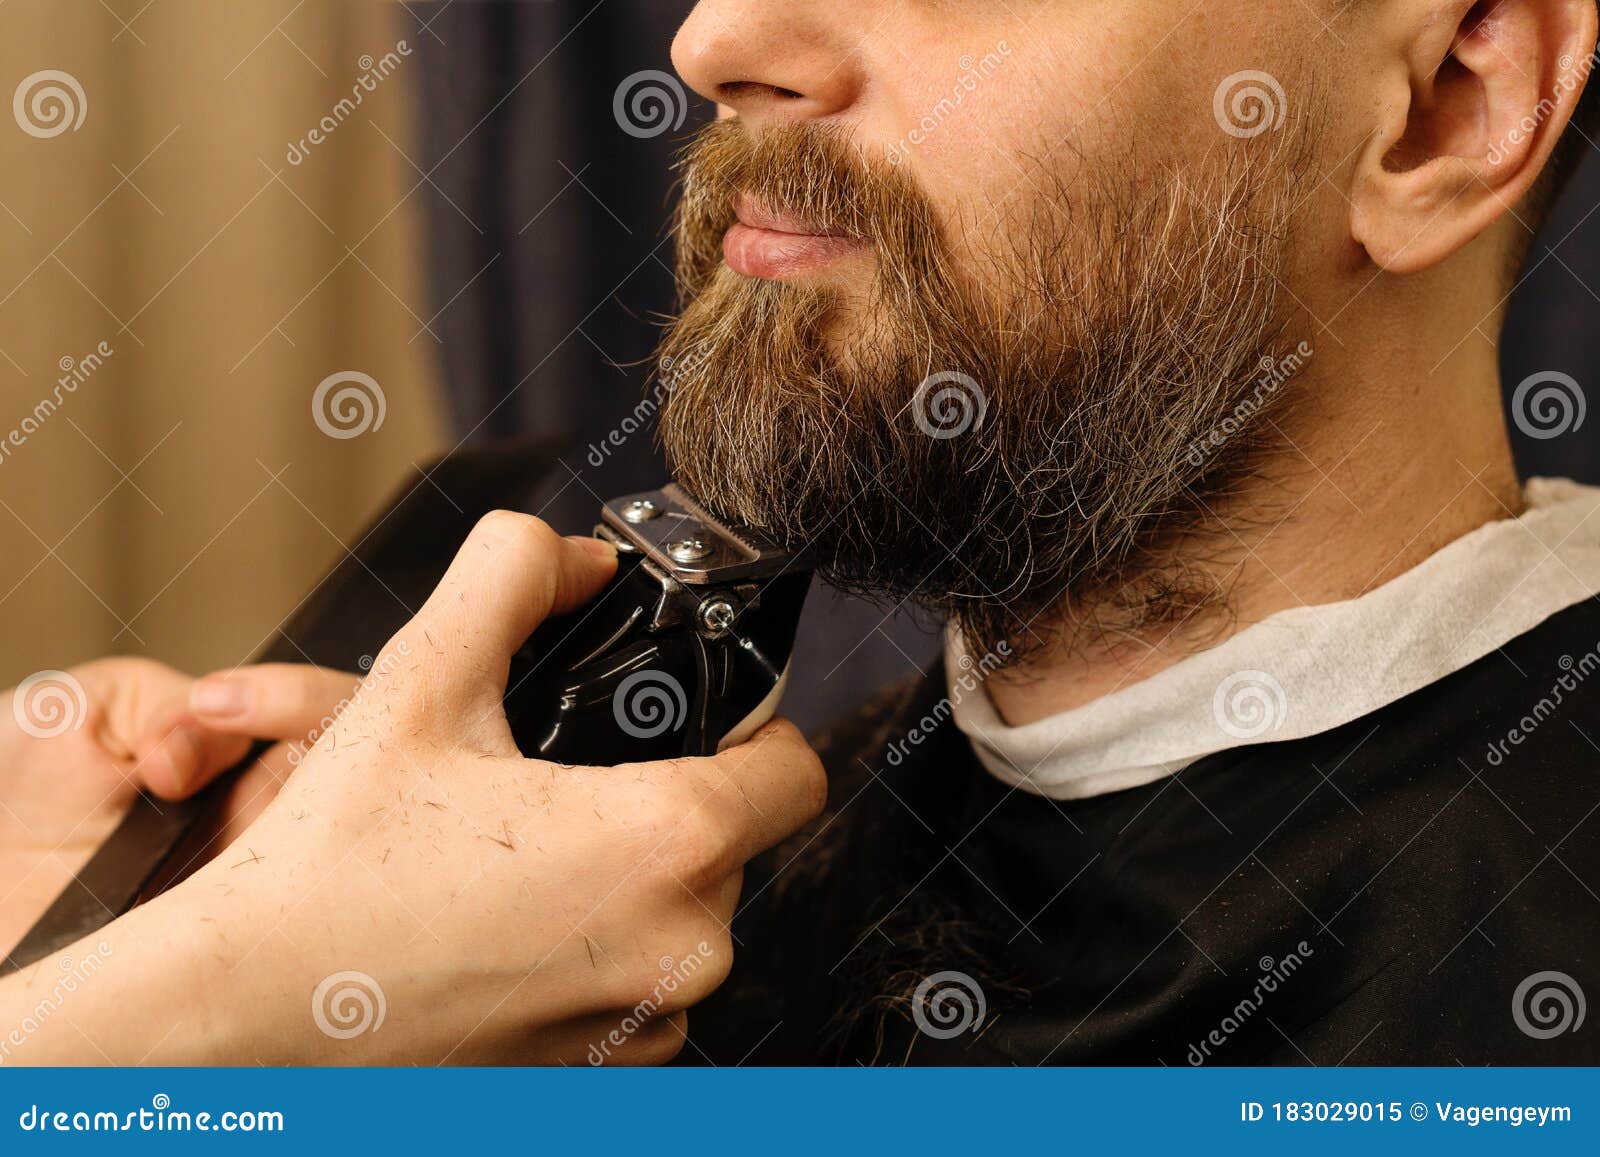 trimming beard with electric razor